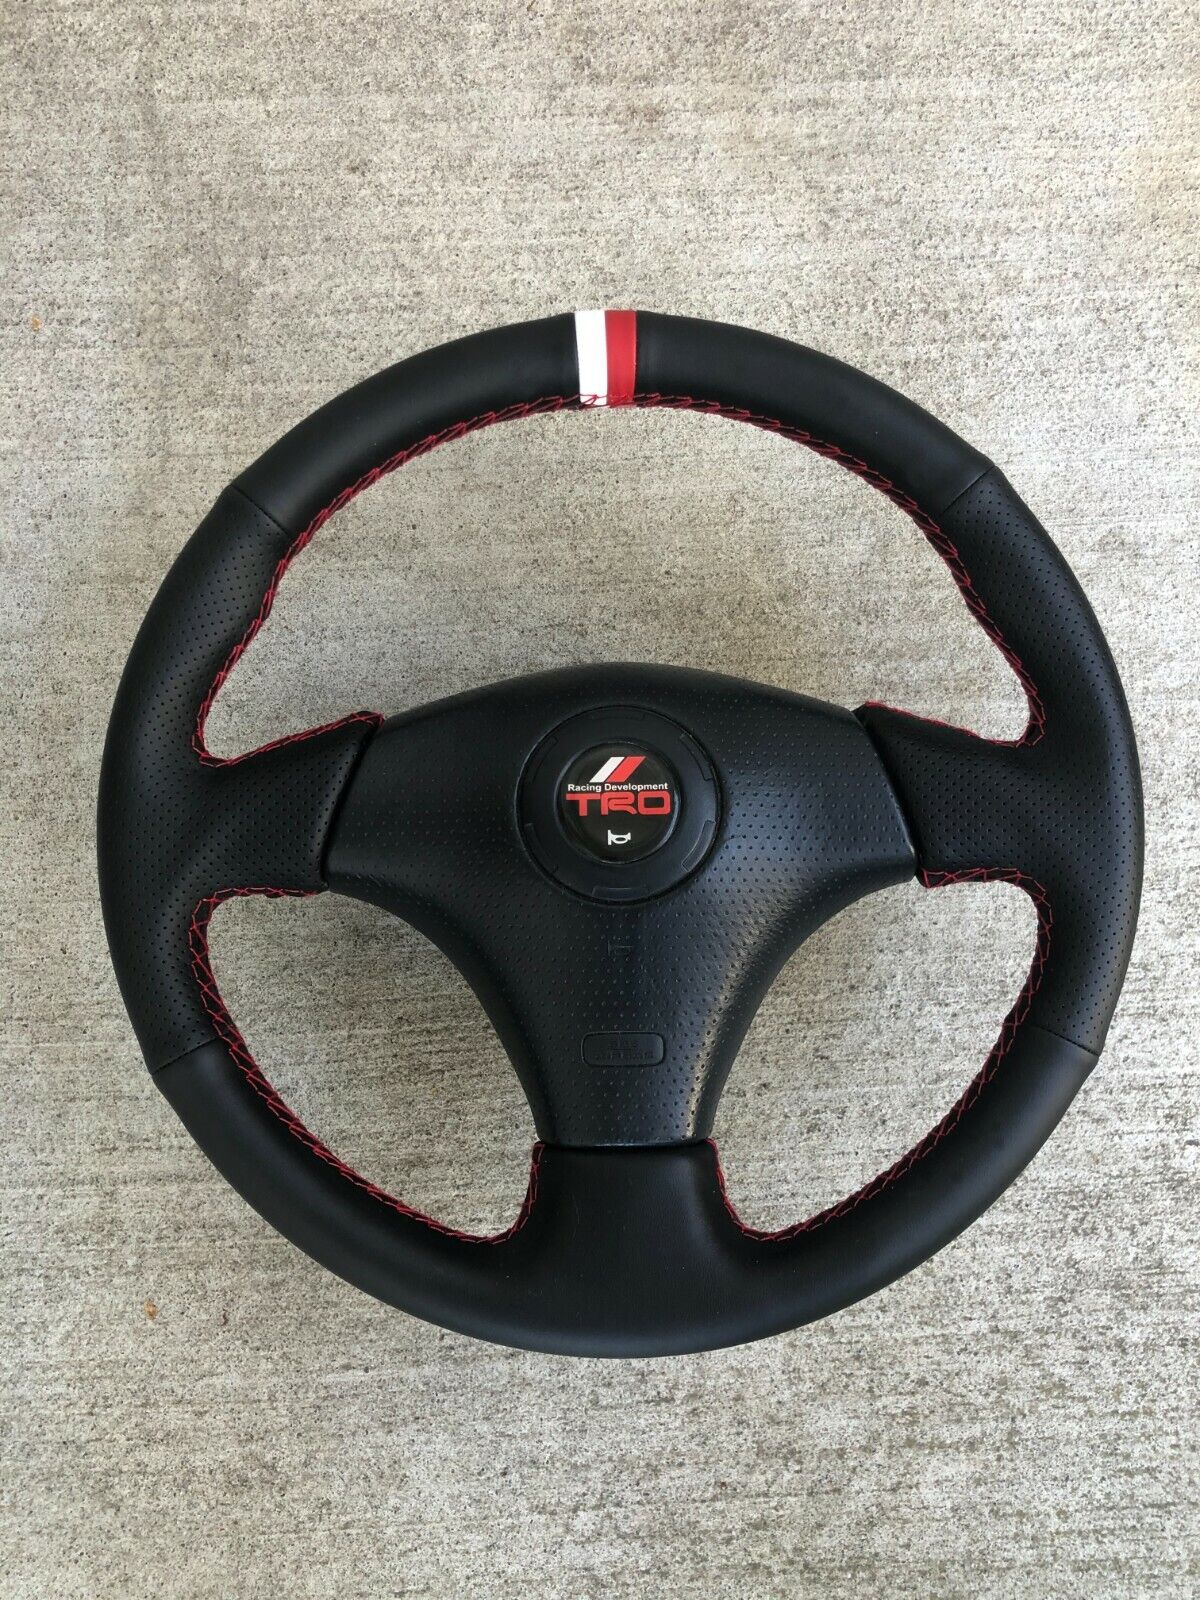 Toyota TRD 3 Spoke Steering Wheel 2 Tone Red White Suede Racing Stripe Supra Mr2